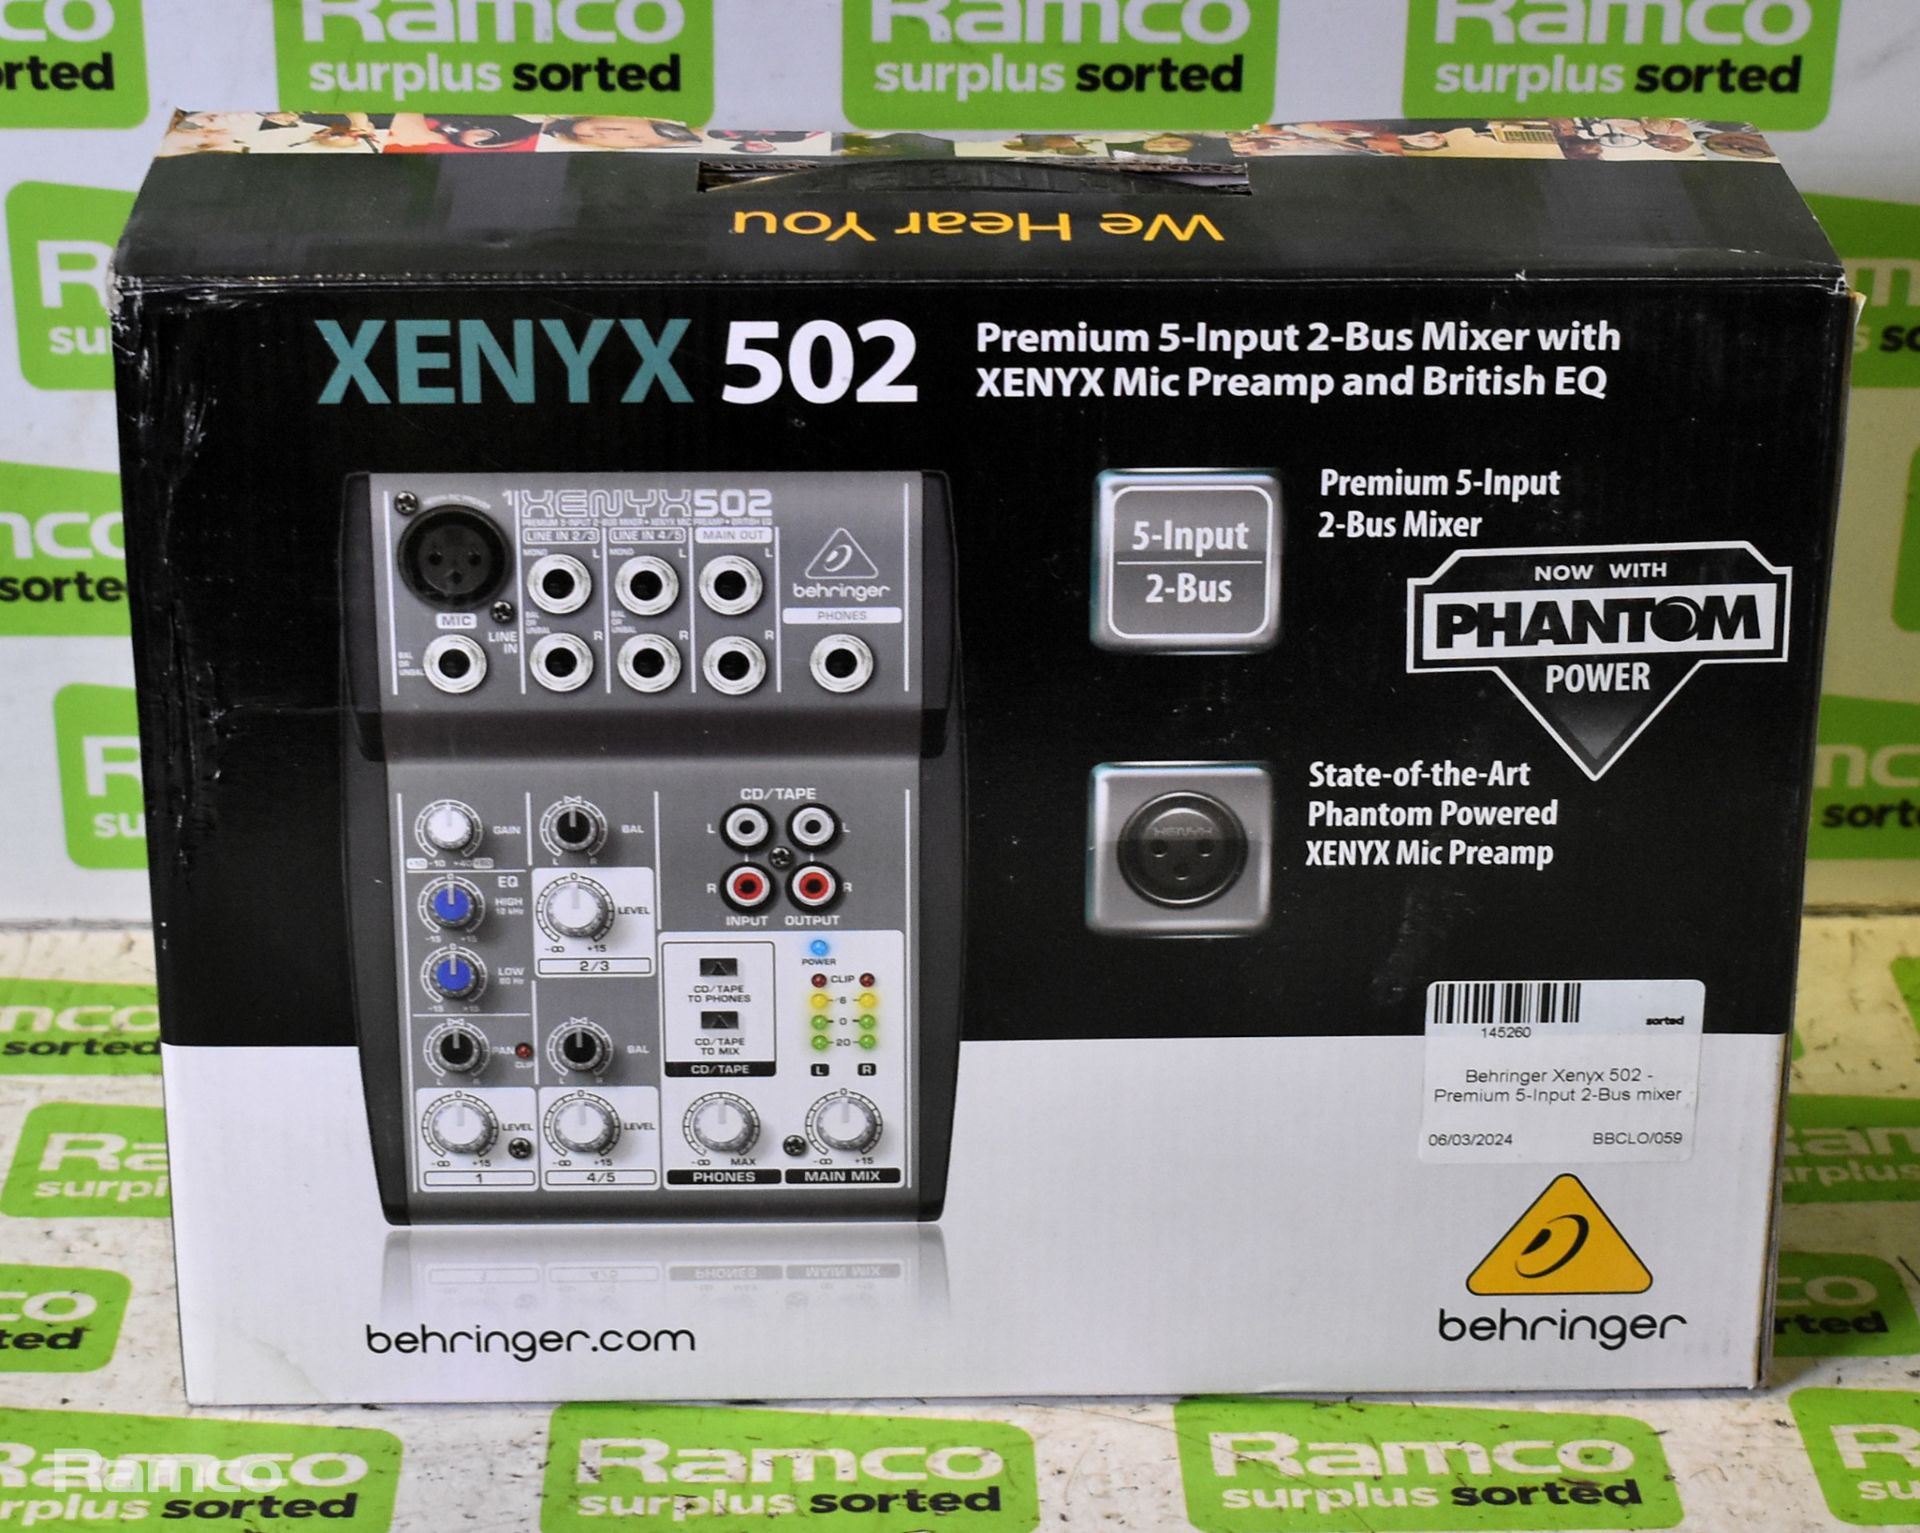 Behringer Xenyx 502 - Premium 5-Input 2-Bus mixer - Image 8 of 8